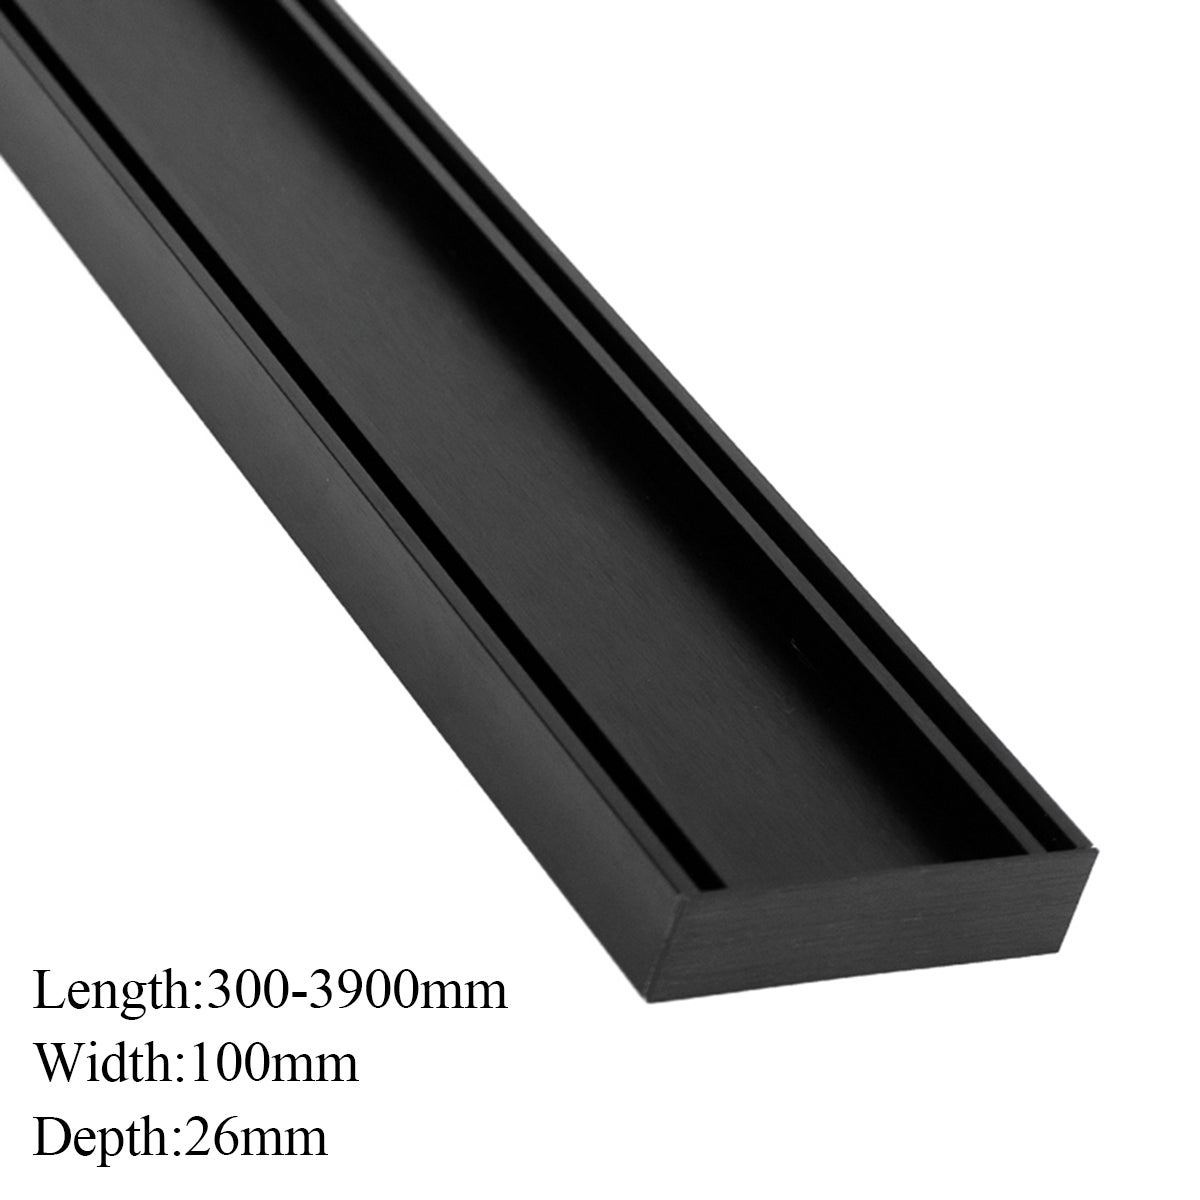 ACA 300-3900mm Lauxes Aluminium Black Tile Insert Floor Grate Drain Shower Waste Any Size